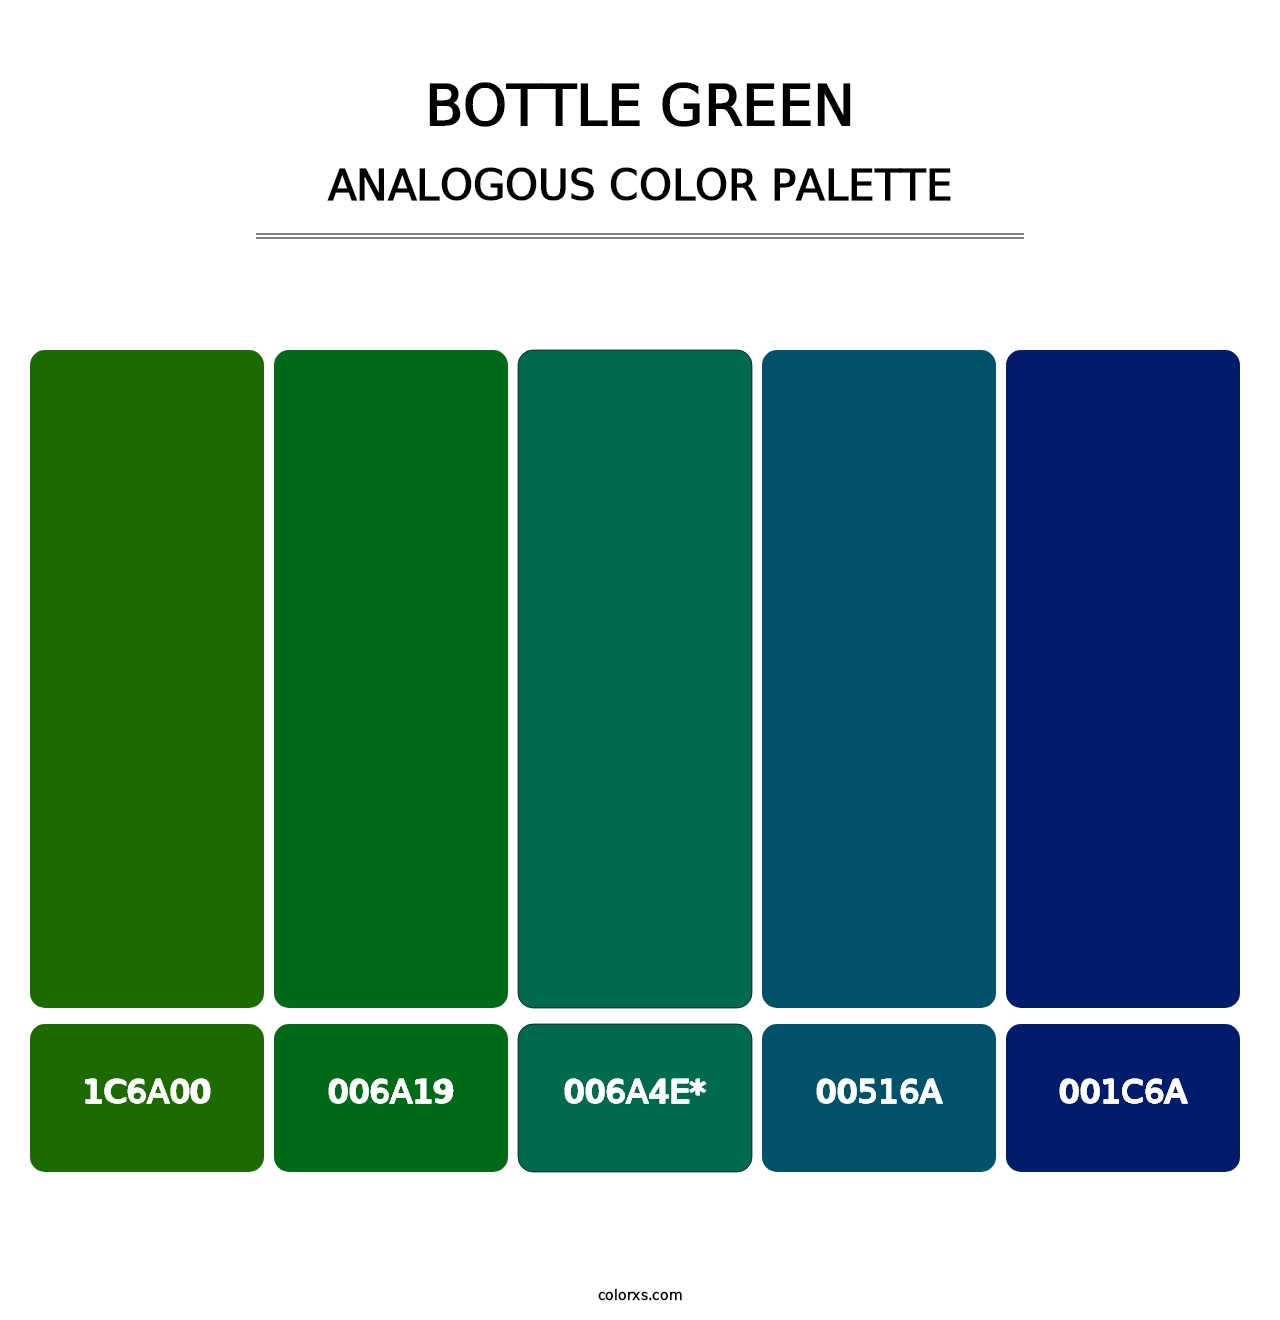 Bottle Green - Analogous Color Palette